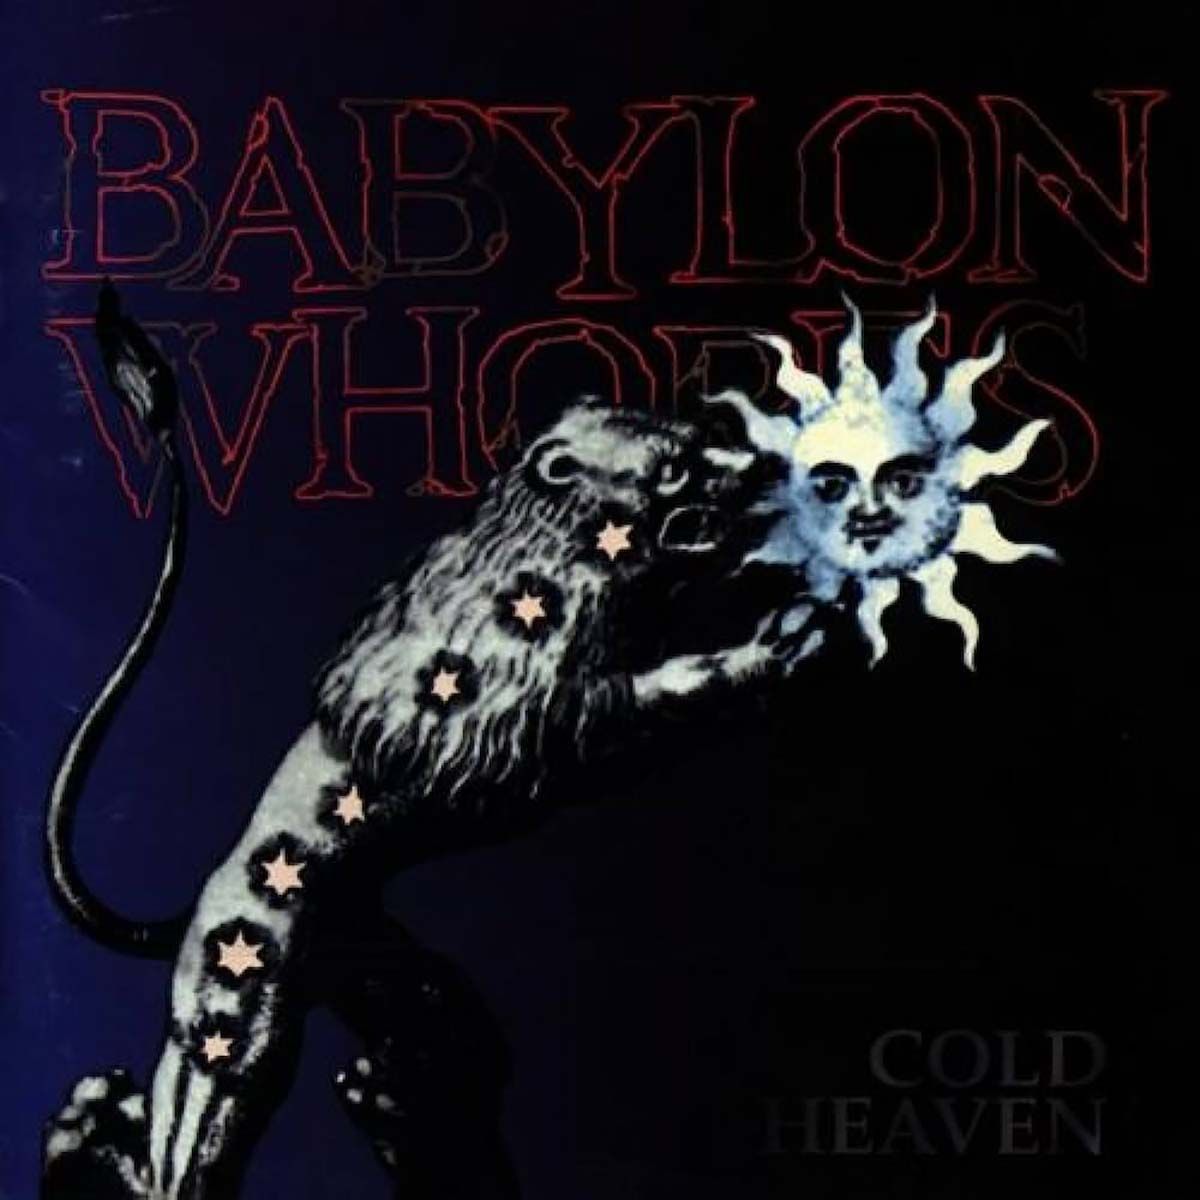 Babylon Whores - Cold Heaven